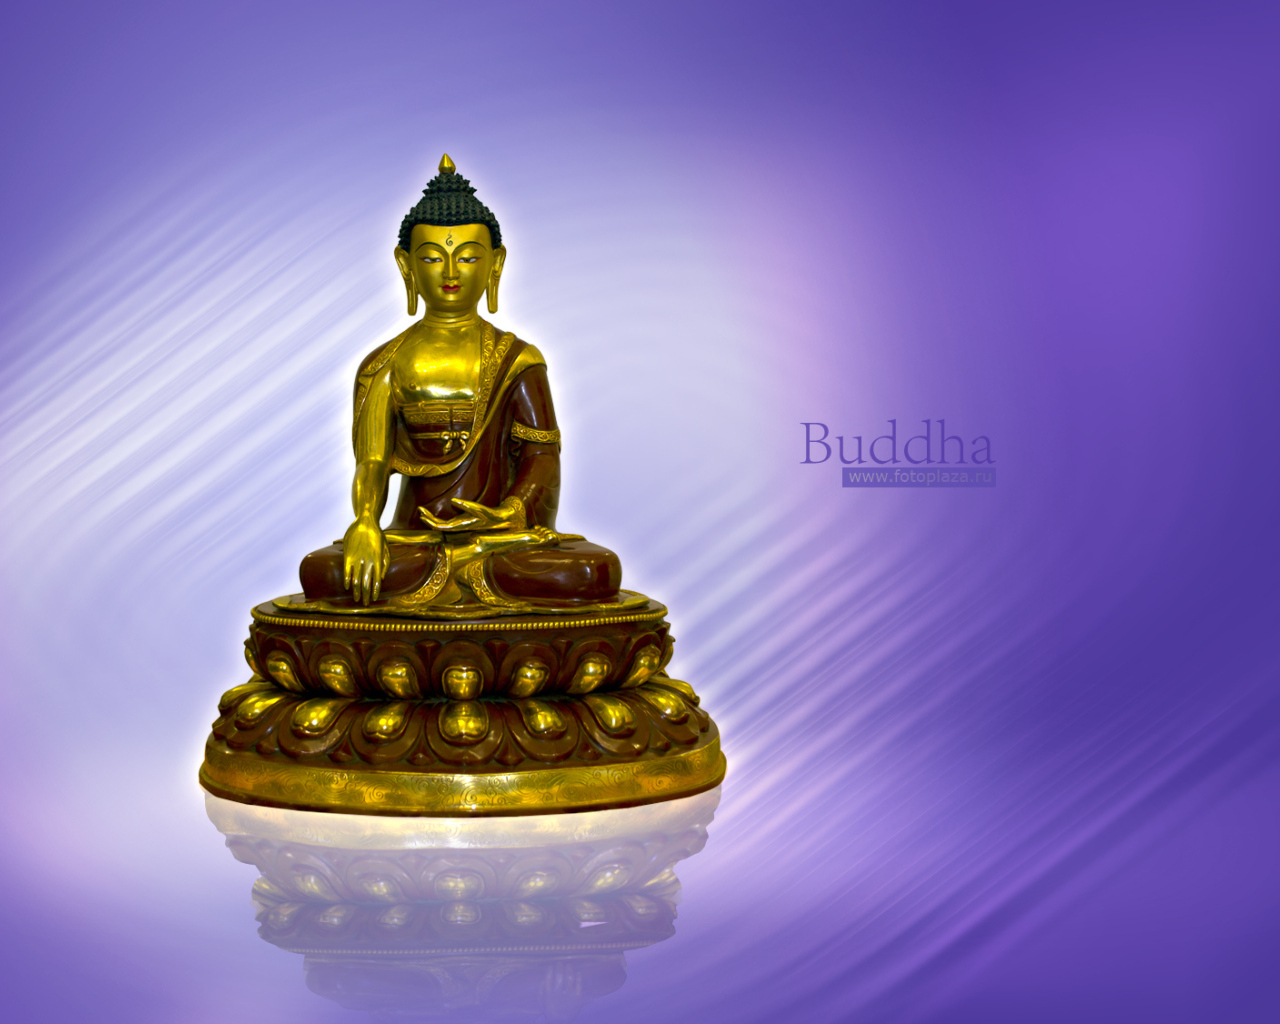 Golden Buddha figurine